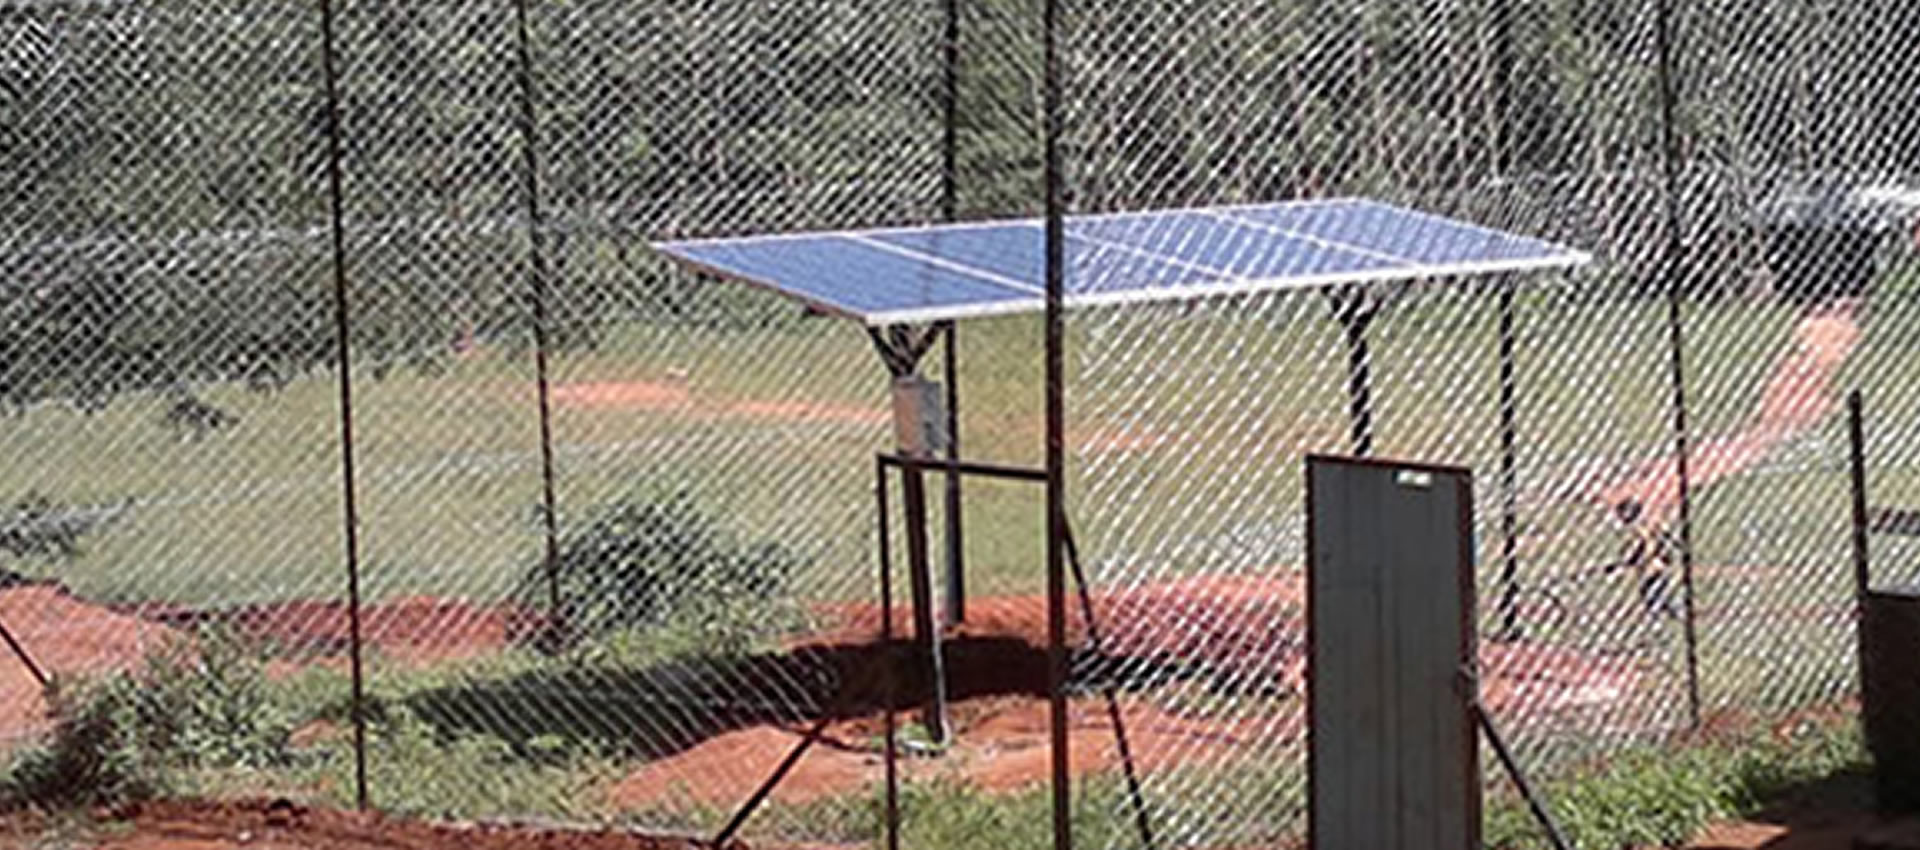 solar-panels-in-africa